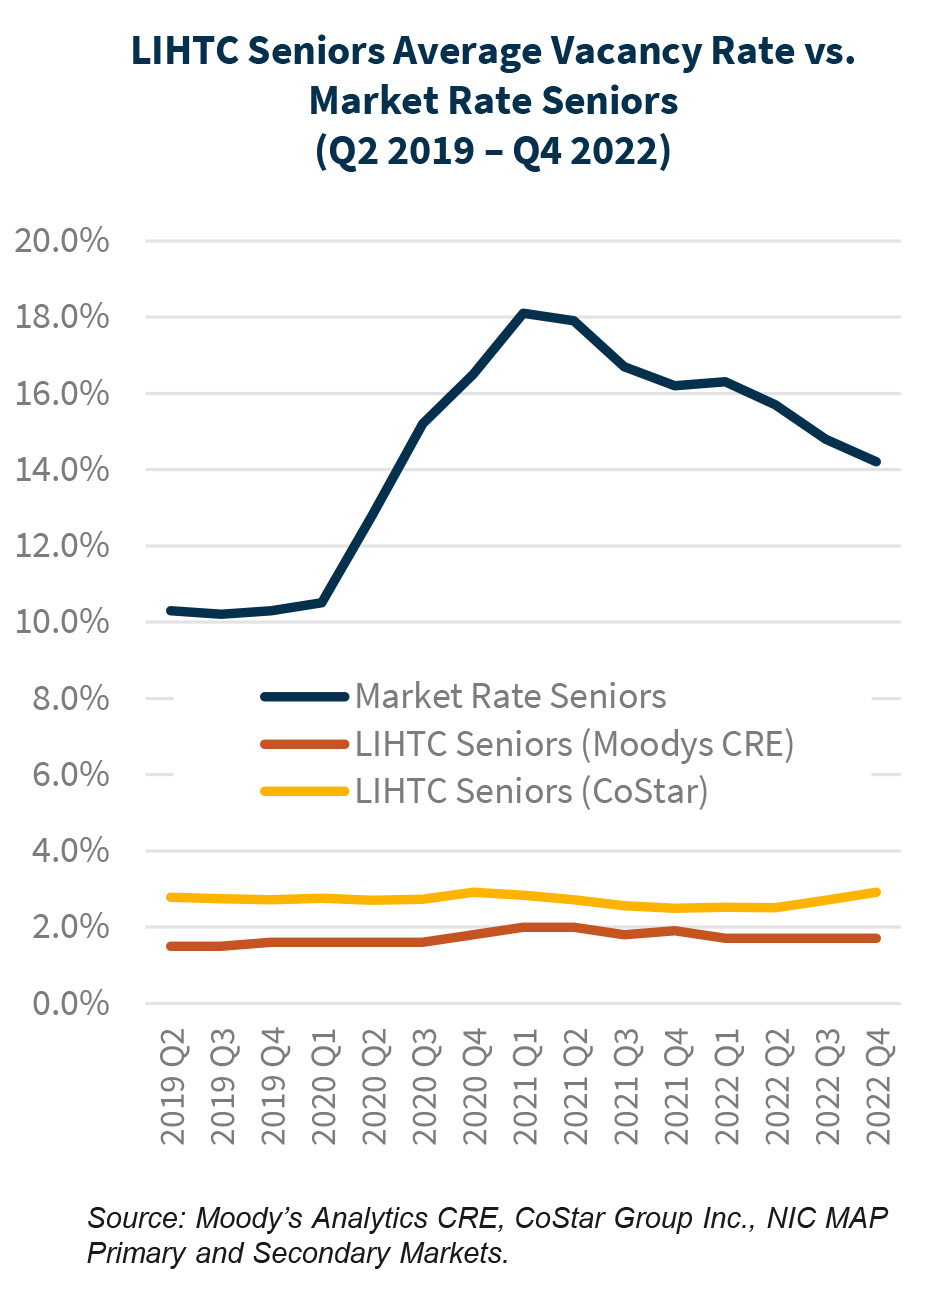 LIHTC Seniors Average Vacancy Rate vs. Market Rate Seniors (Q2 2019 - Q4 2022)